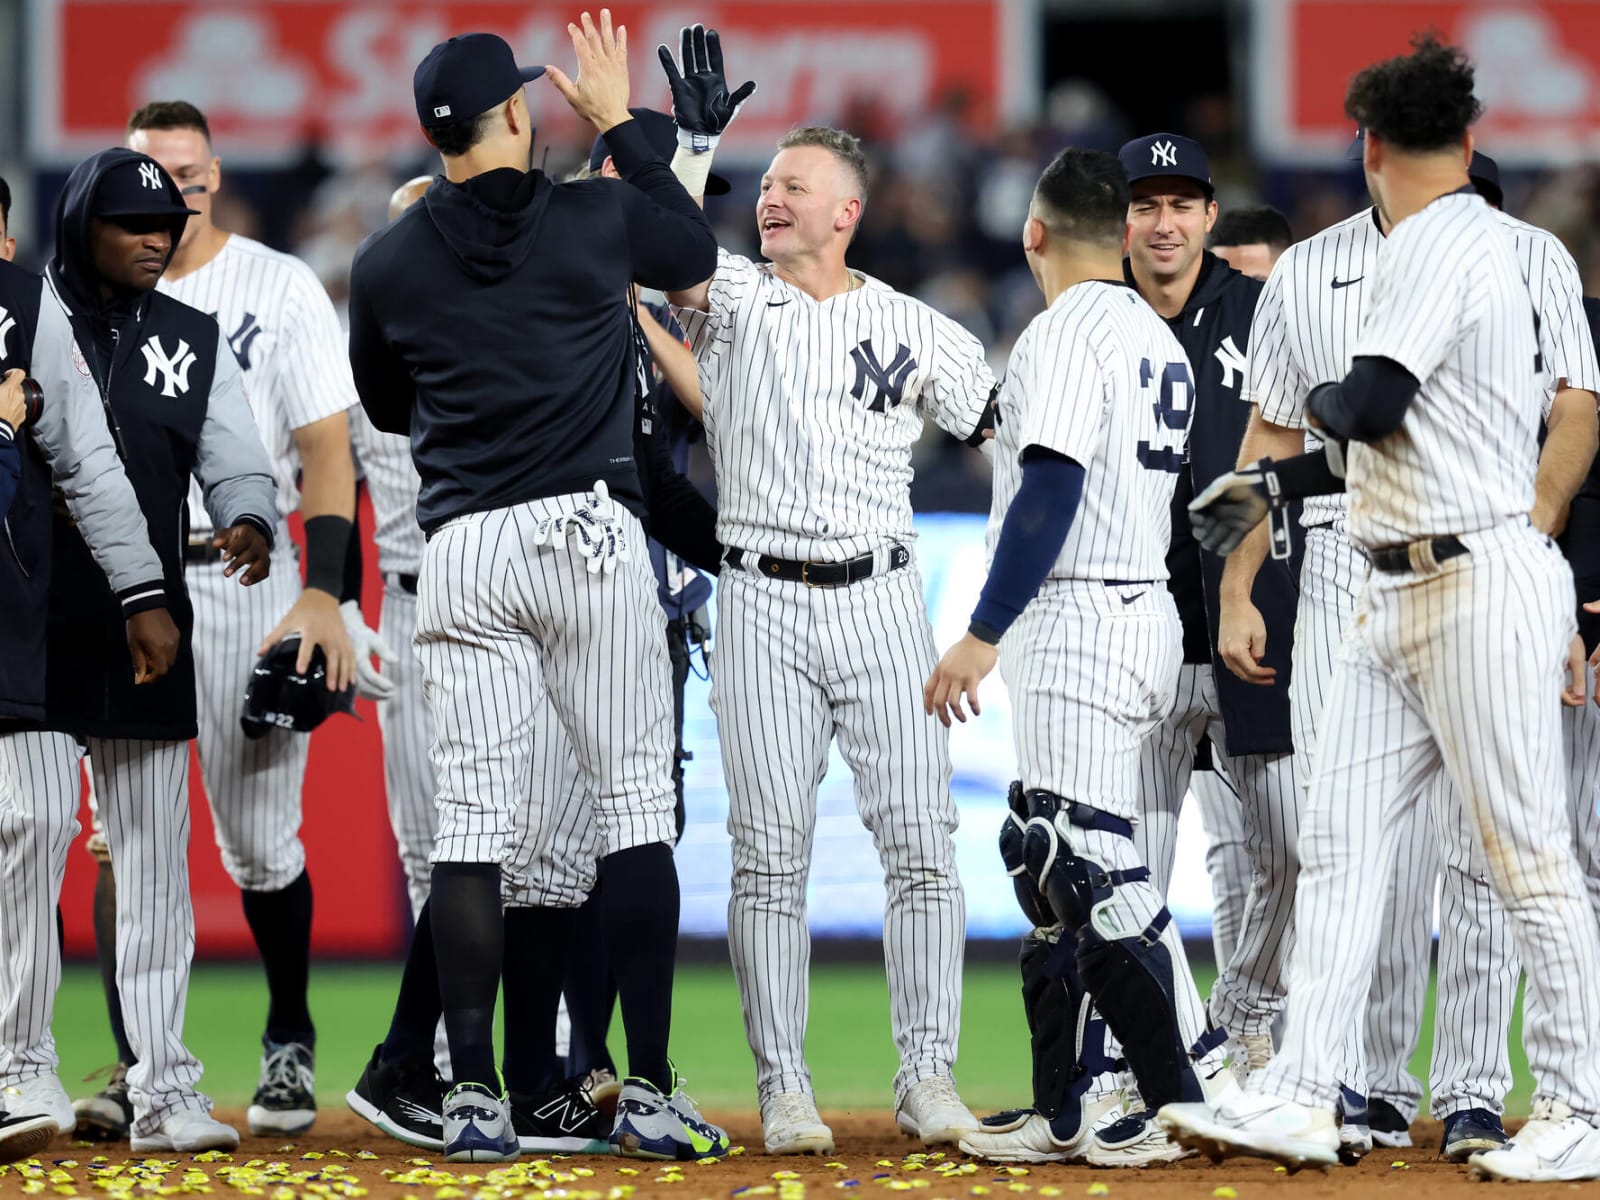 Yankees clinch 6th consecutive playoff berth